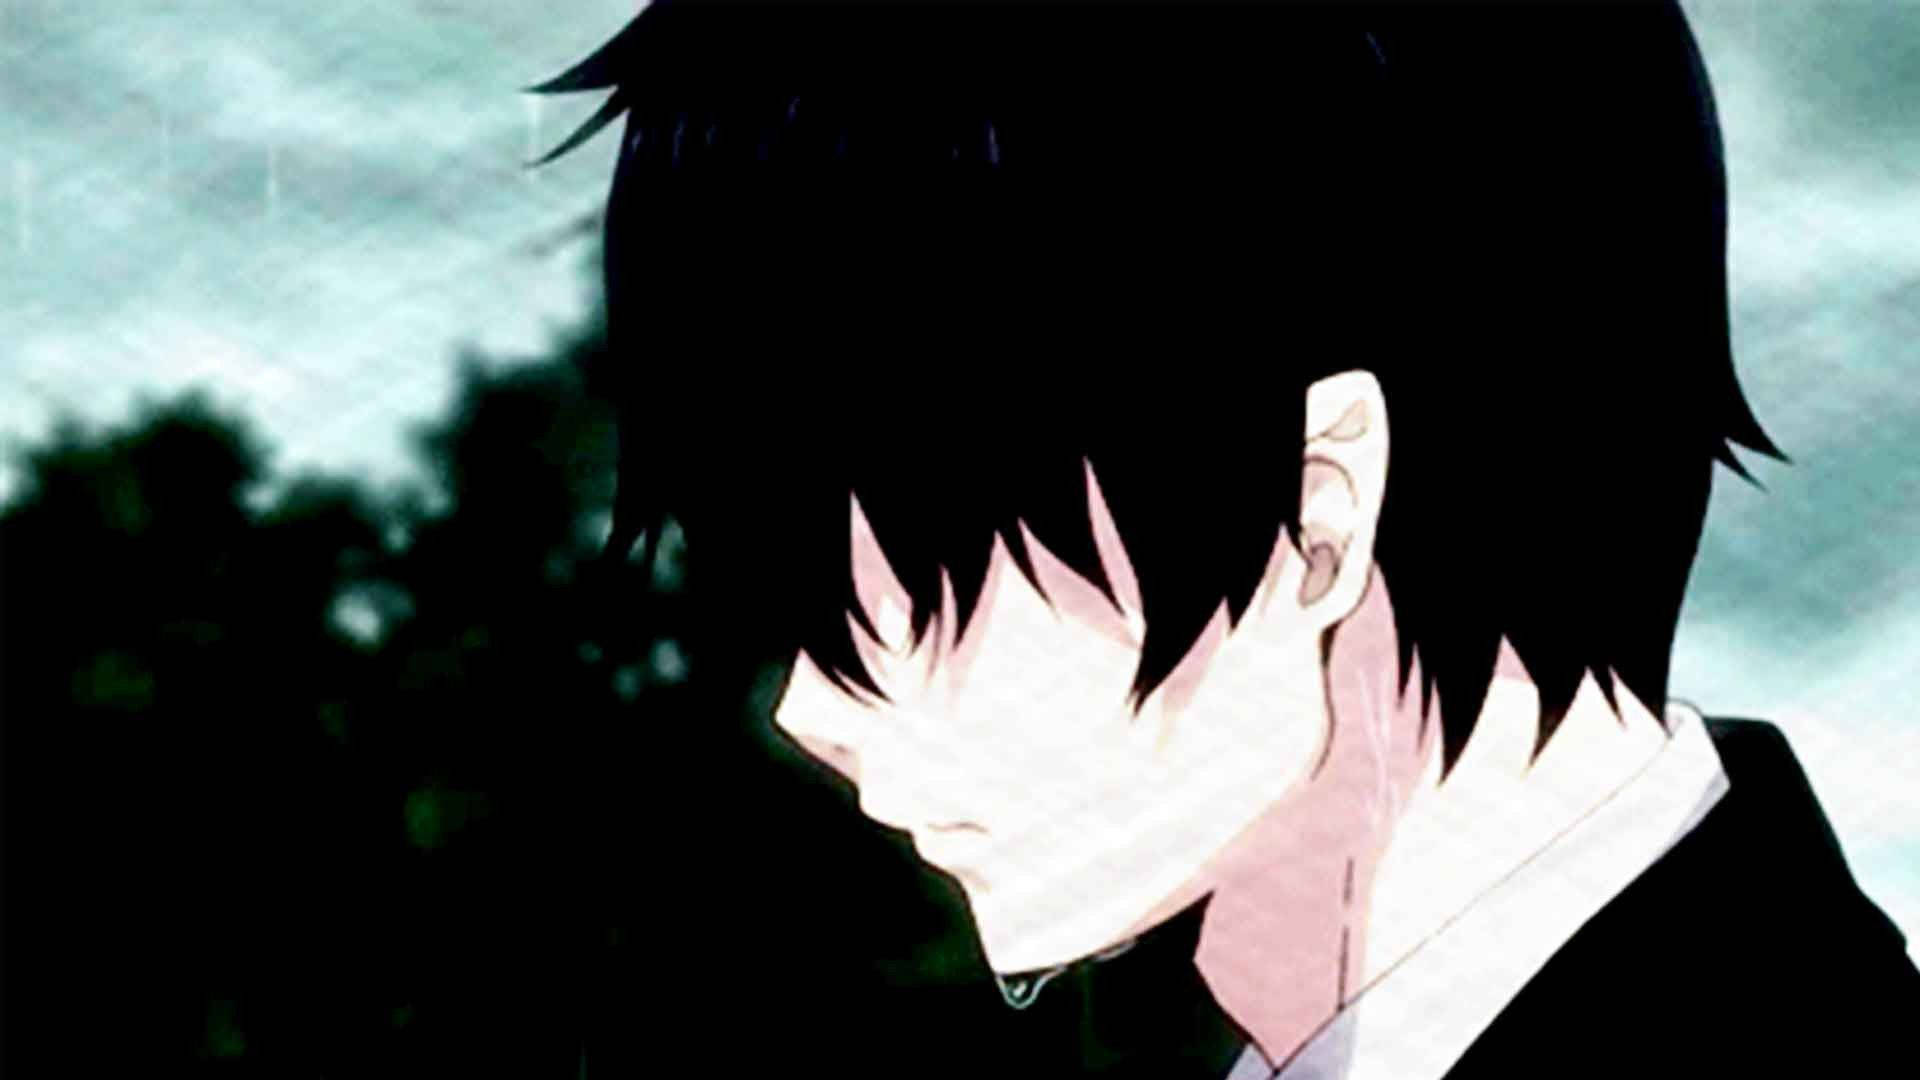 Alone Sad Anime Boys With Tears Wallpaper